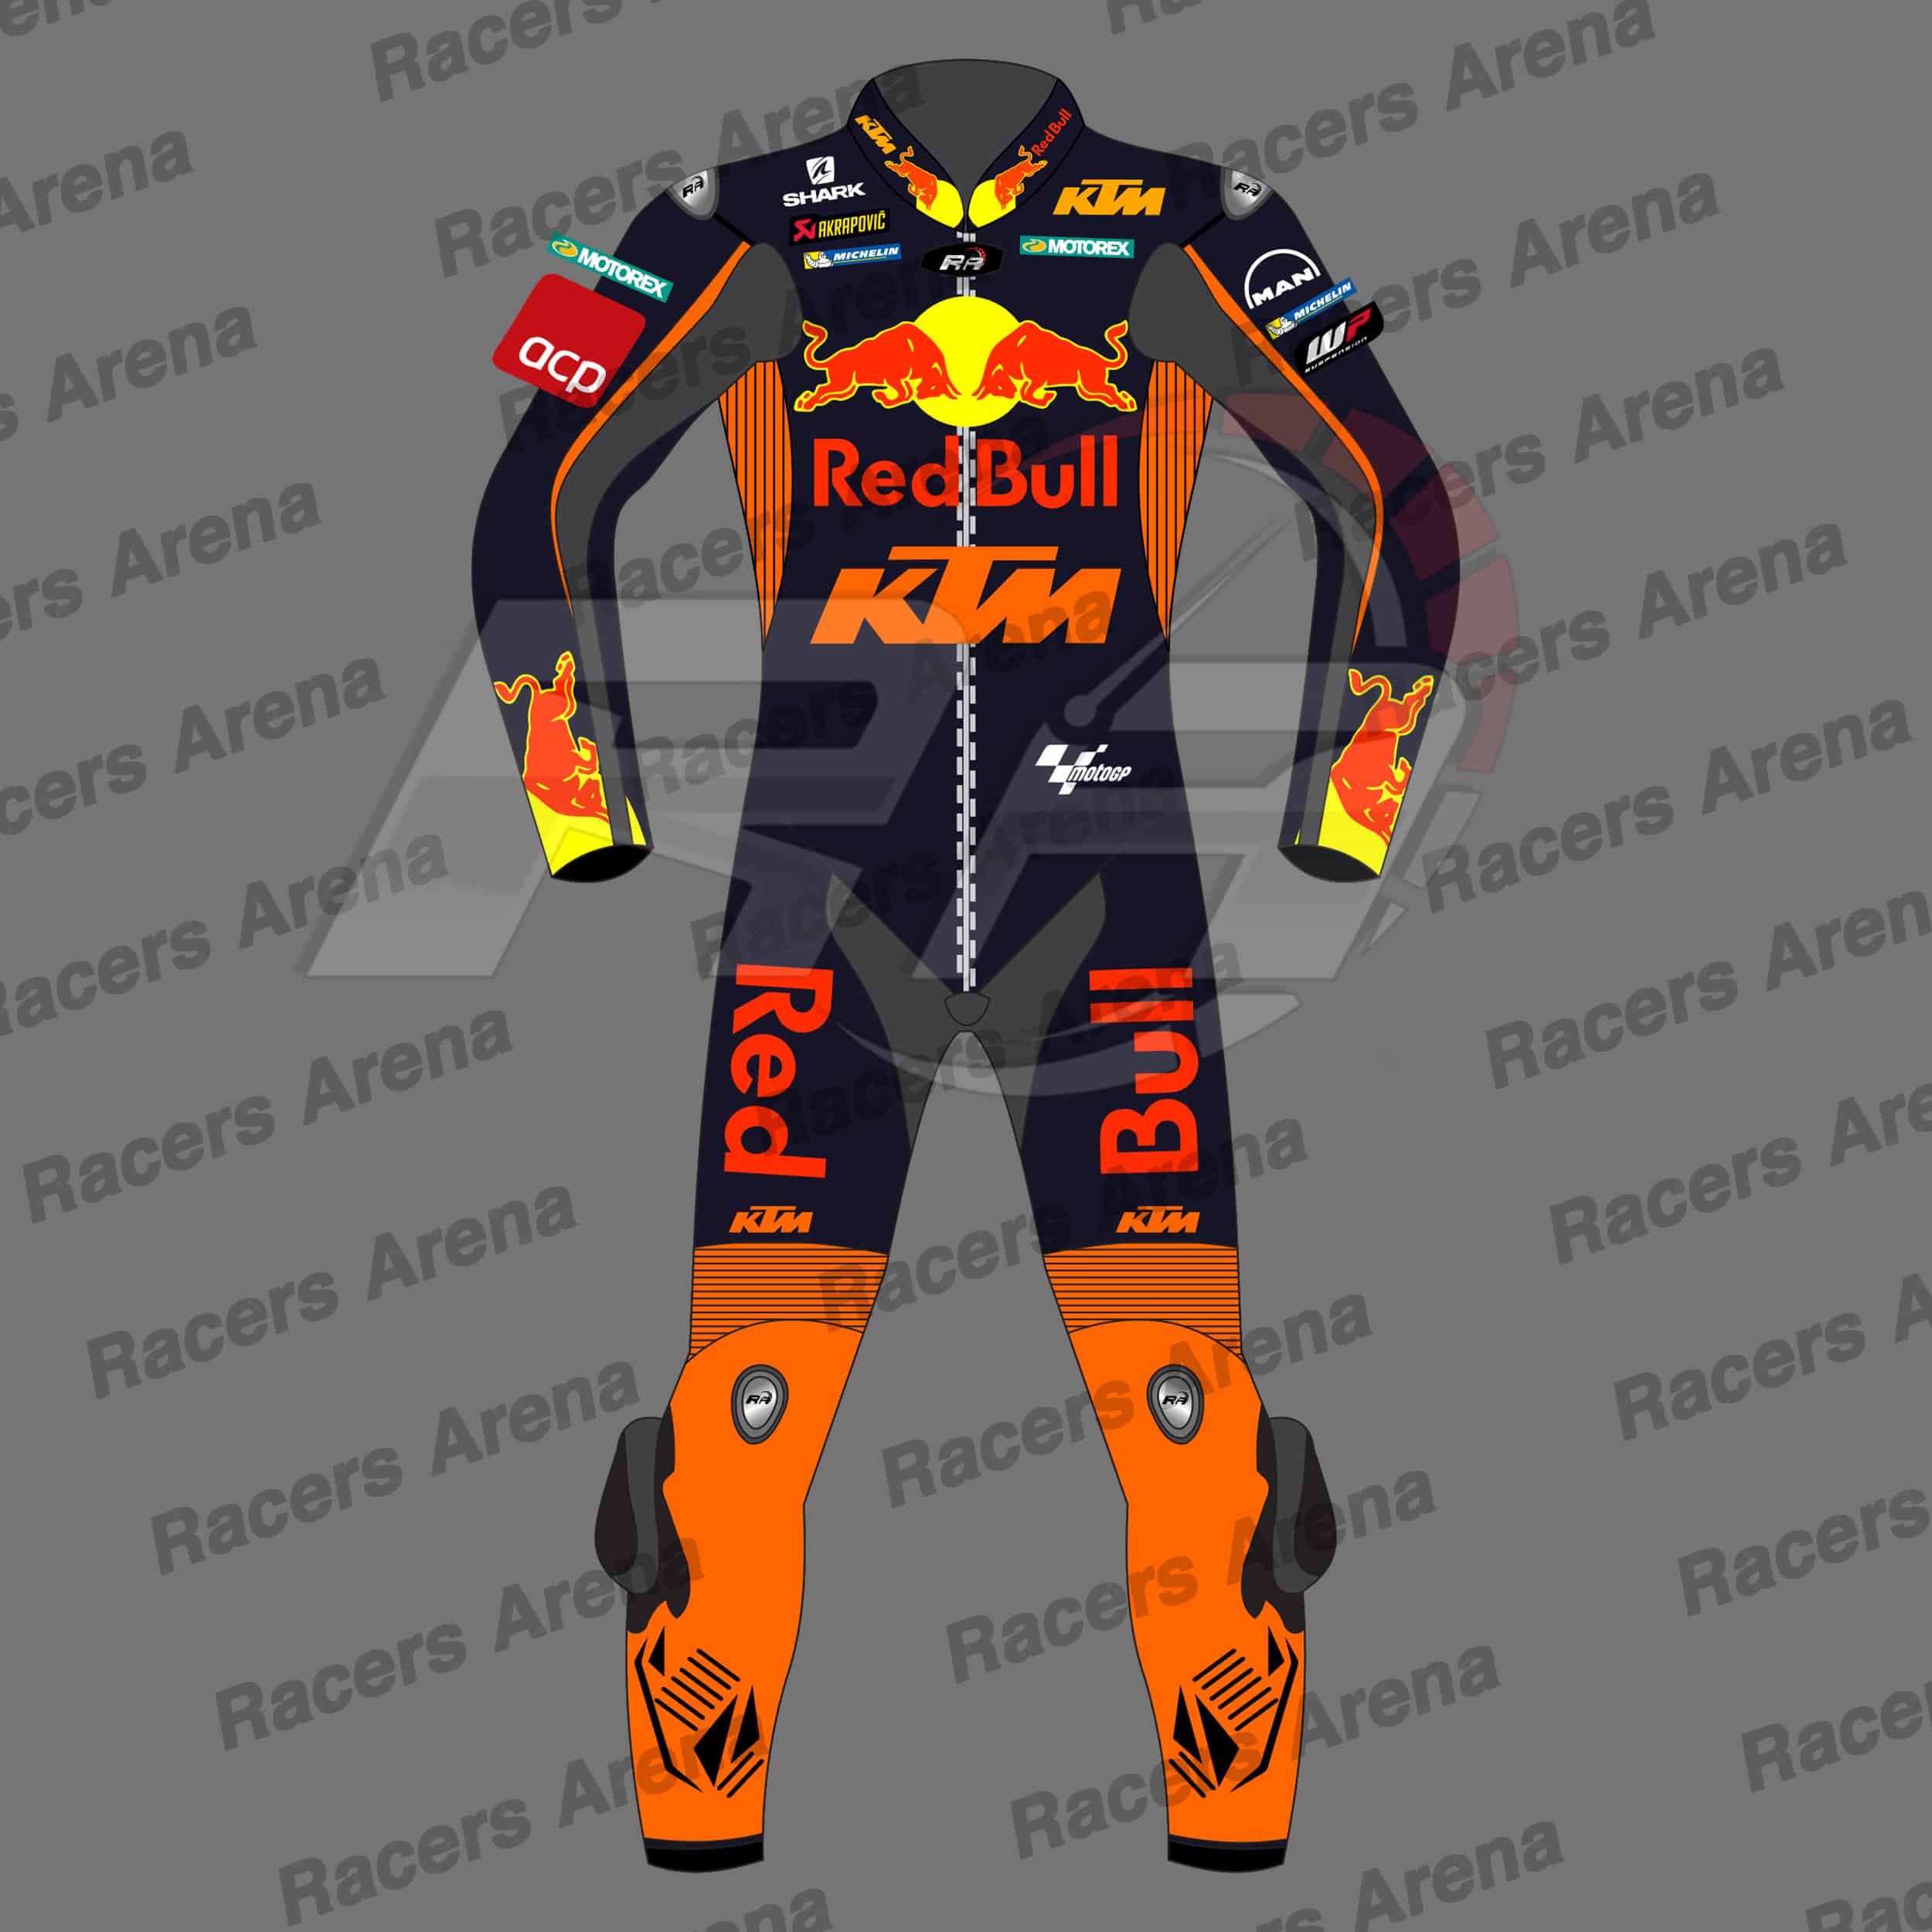 Jack Miller Red bull KTM MotoGP 2023 Race Suit - Racers Arena UK